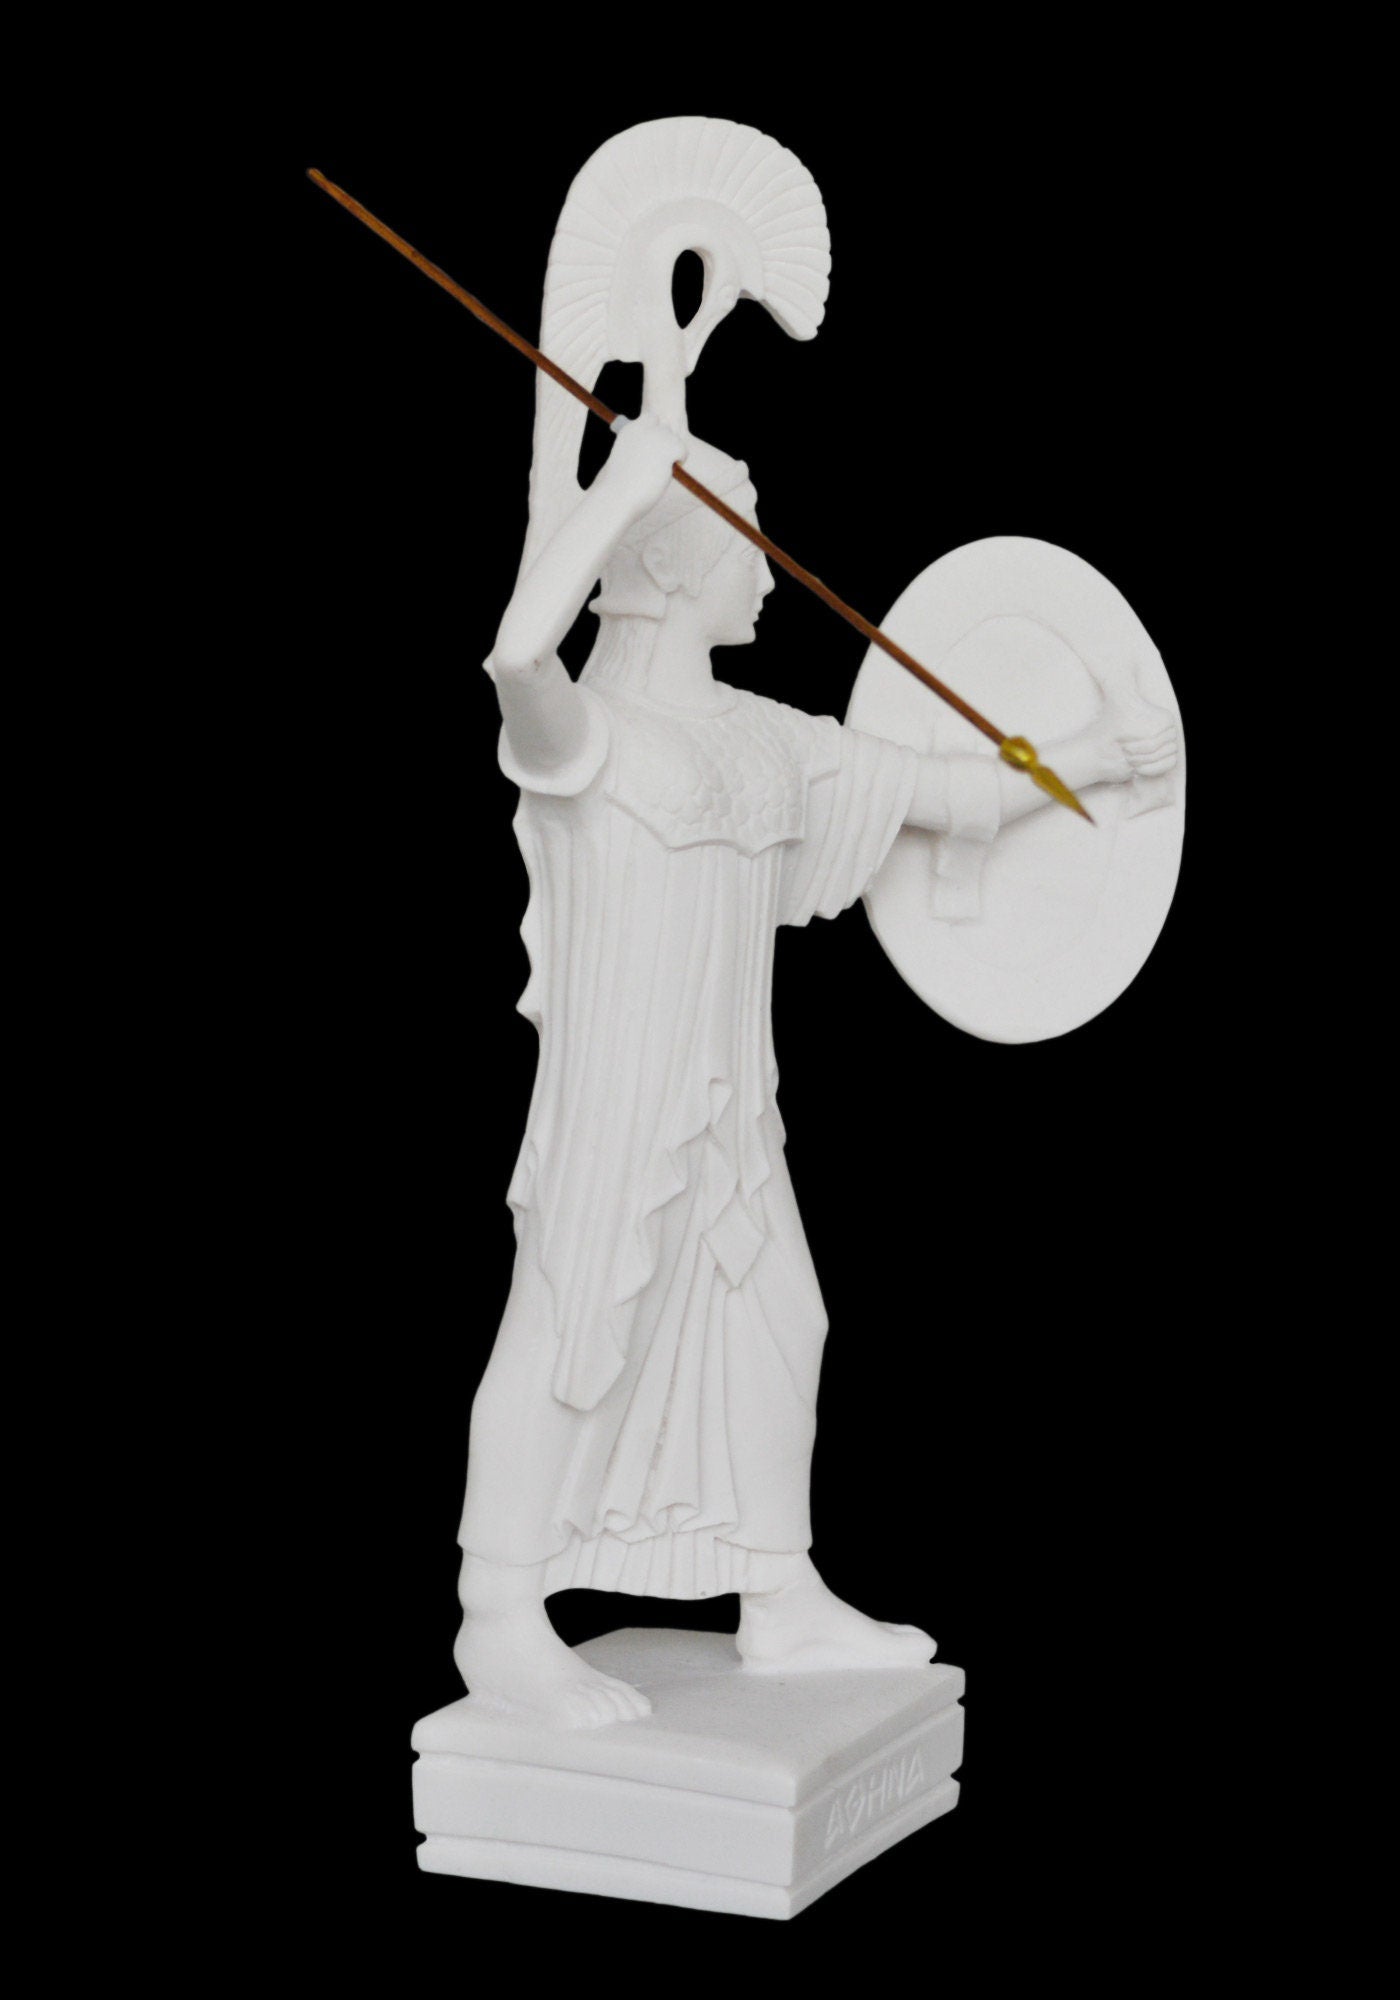 Athena Minerva - Greek Roman Goddess of Wisdom, Strength, Strategy, Courage, Inspiration, Arts, Crafts, and Skill - Alabaster Statue